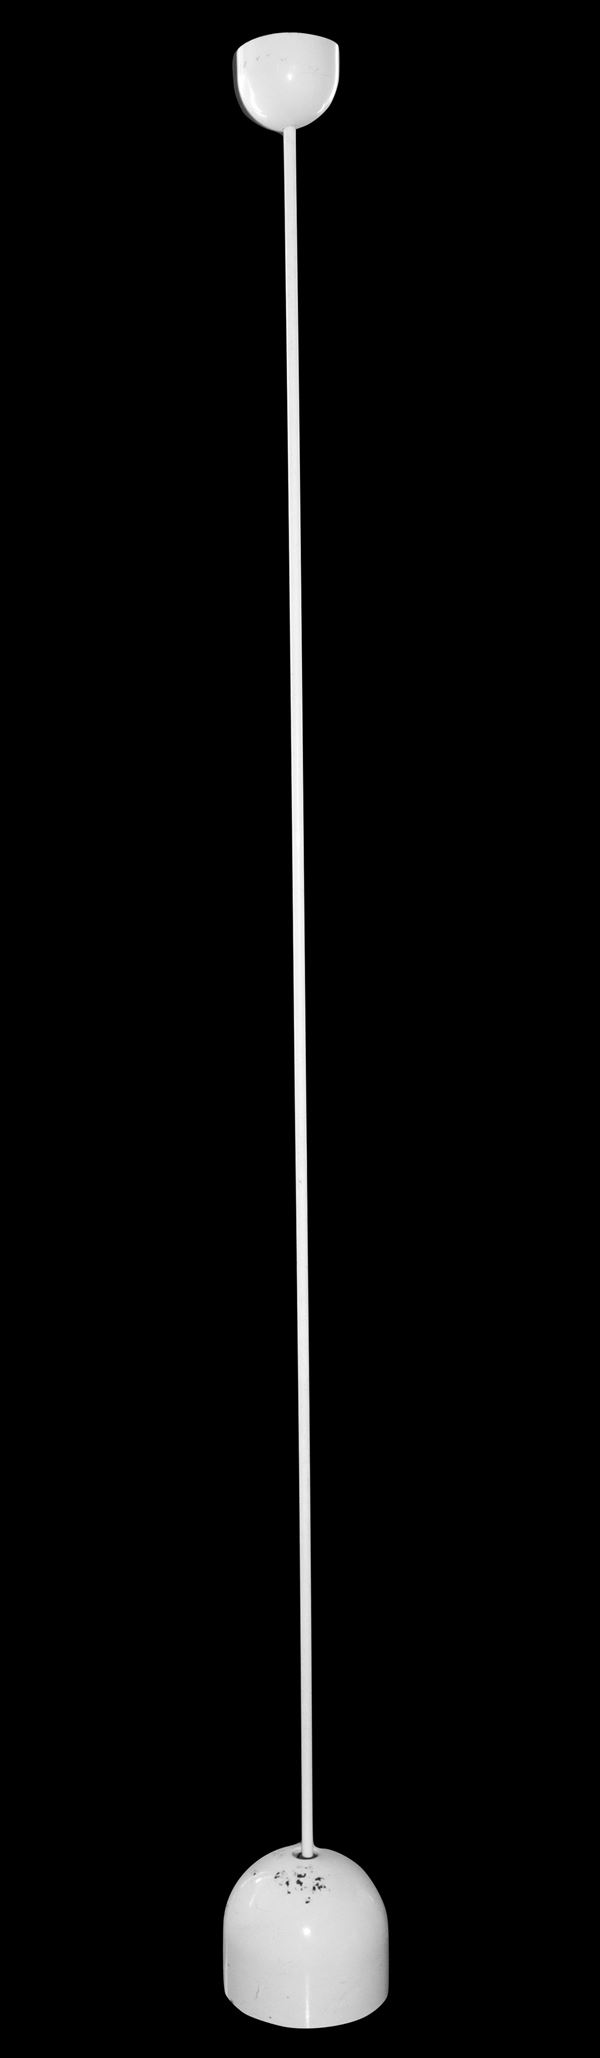 Lumi Milano - White lacquered floor lamp, model Hypotenuse